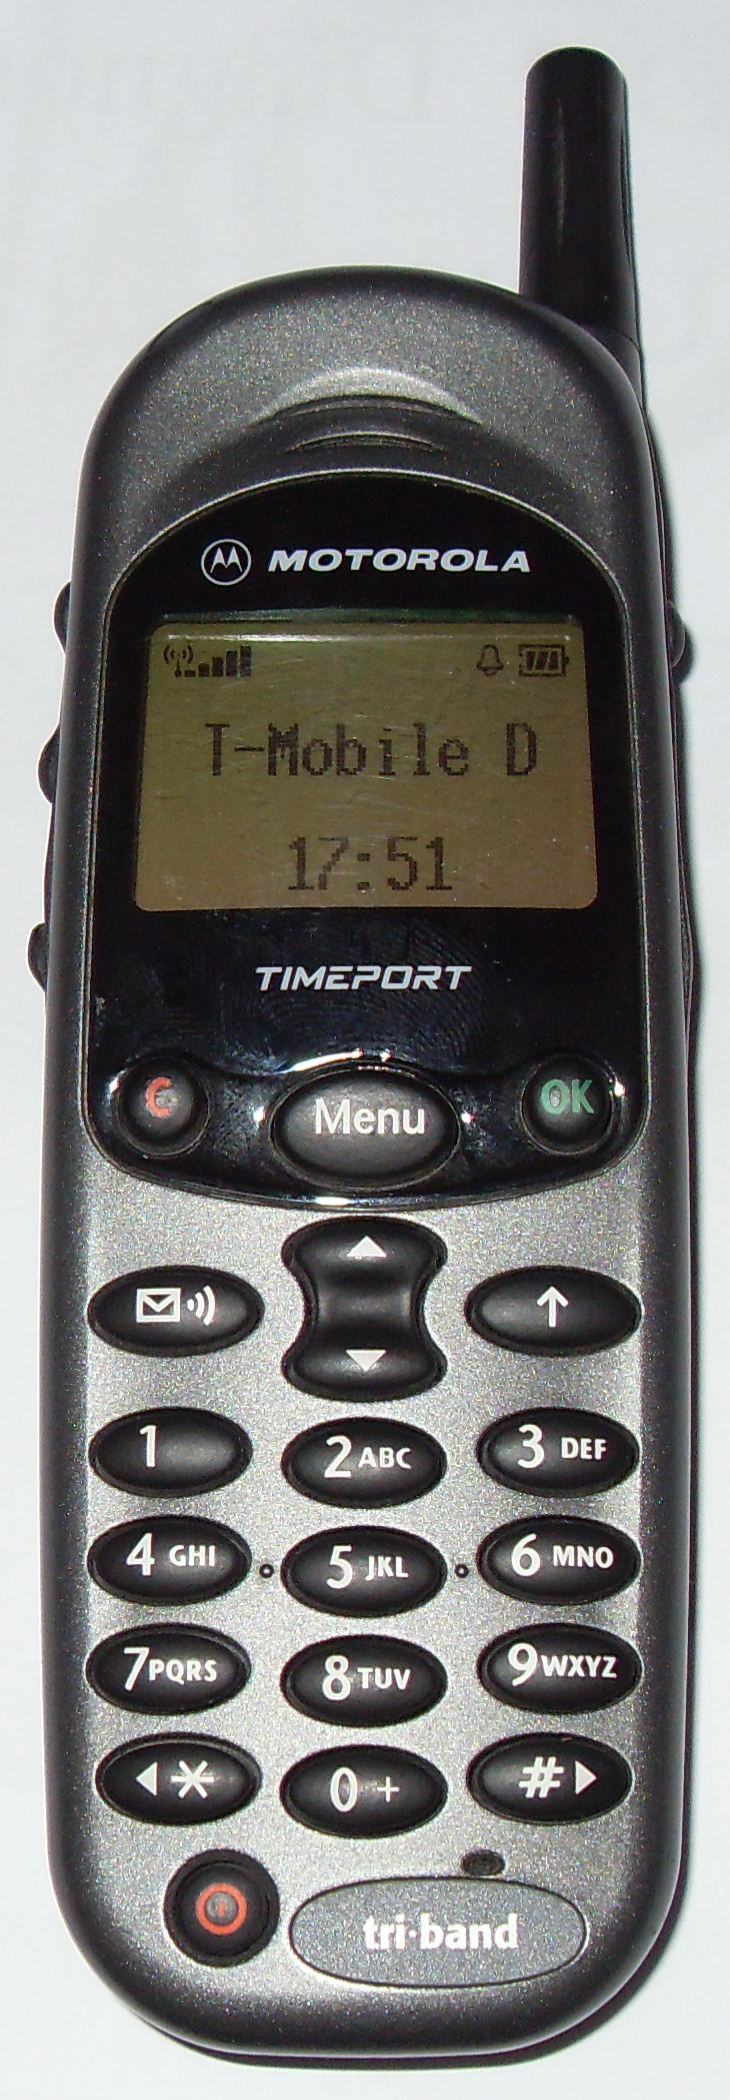 Motorola Timeport   Wikipedia  the free encyclopedia